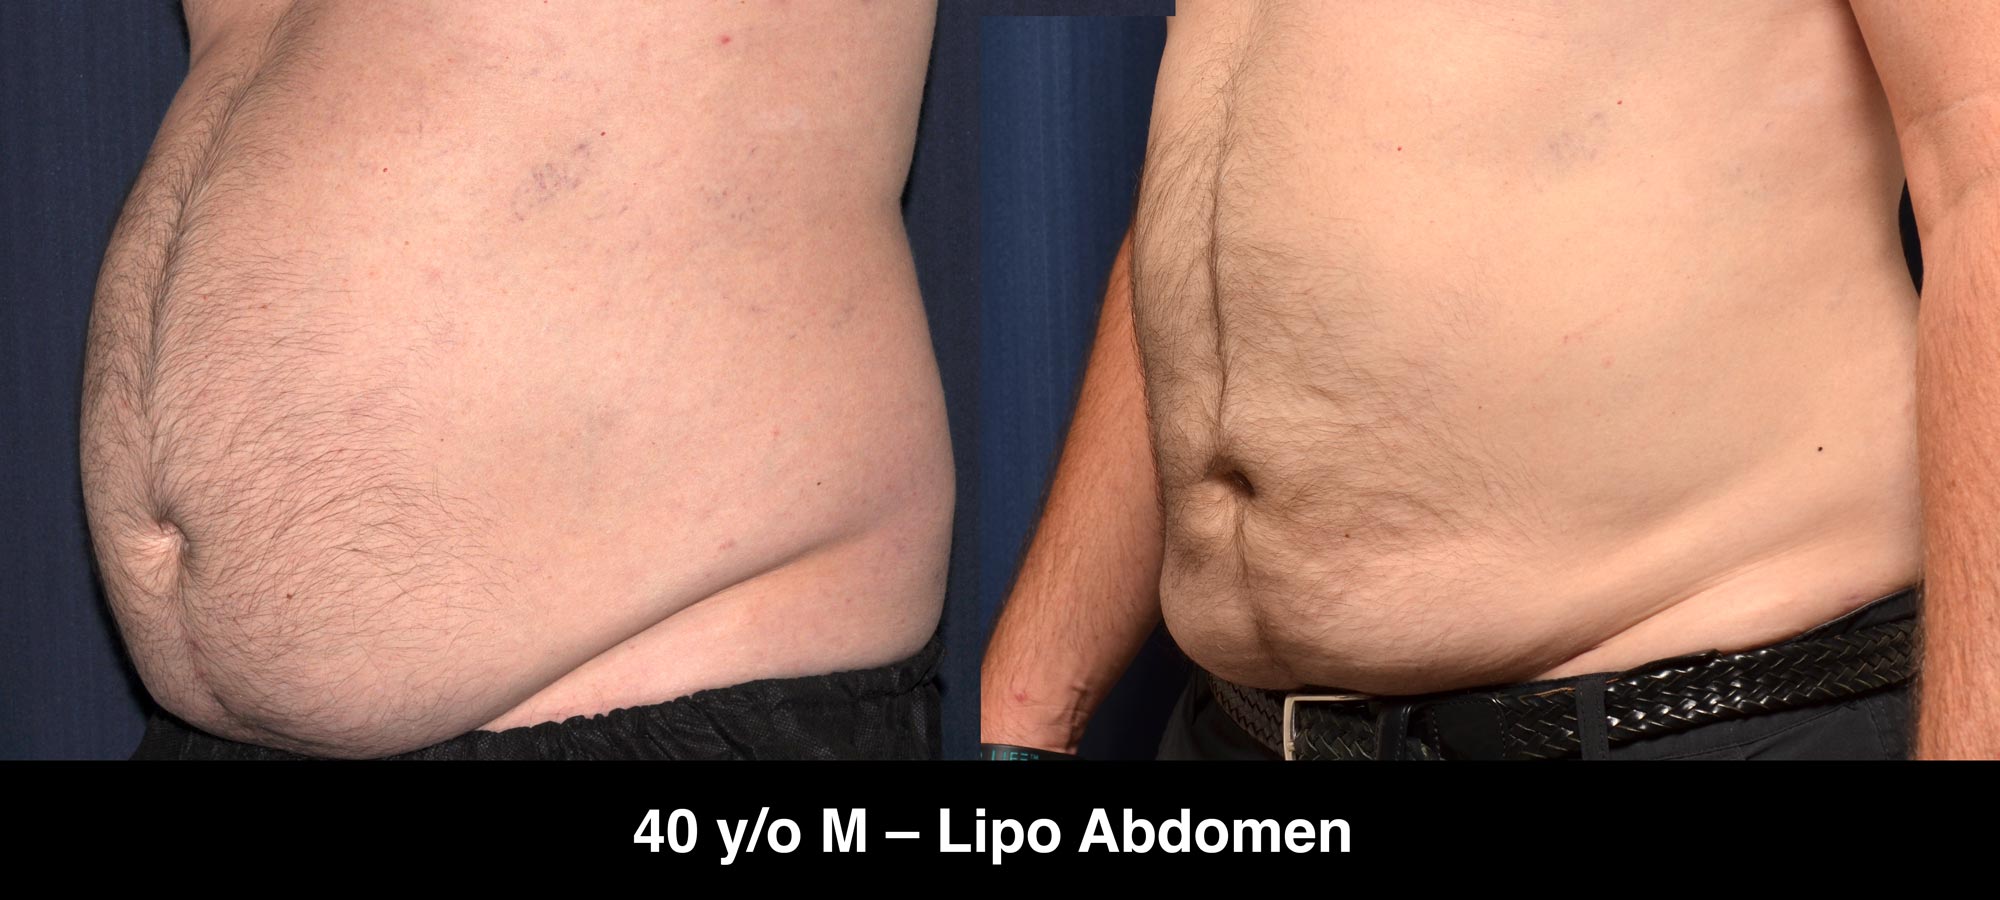 Large Volume Liposuction Male Abdomen